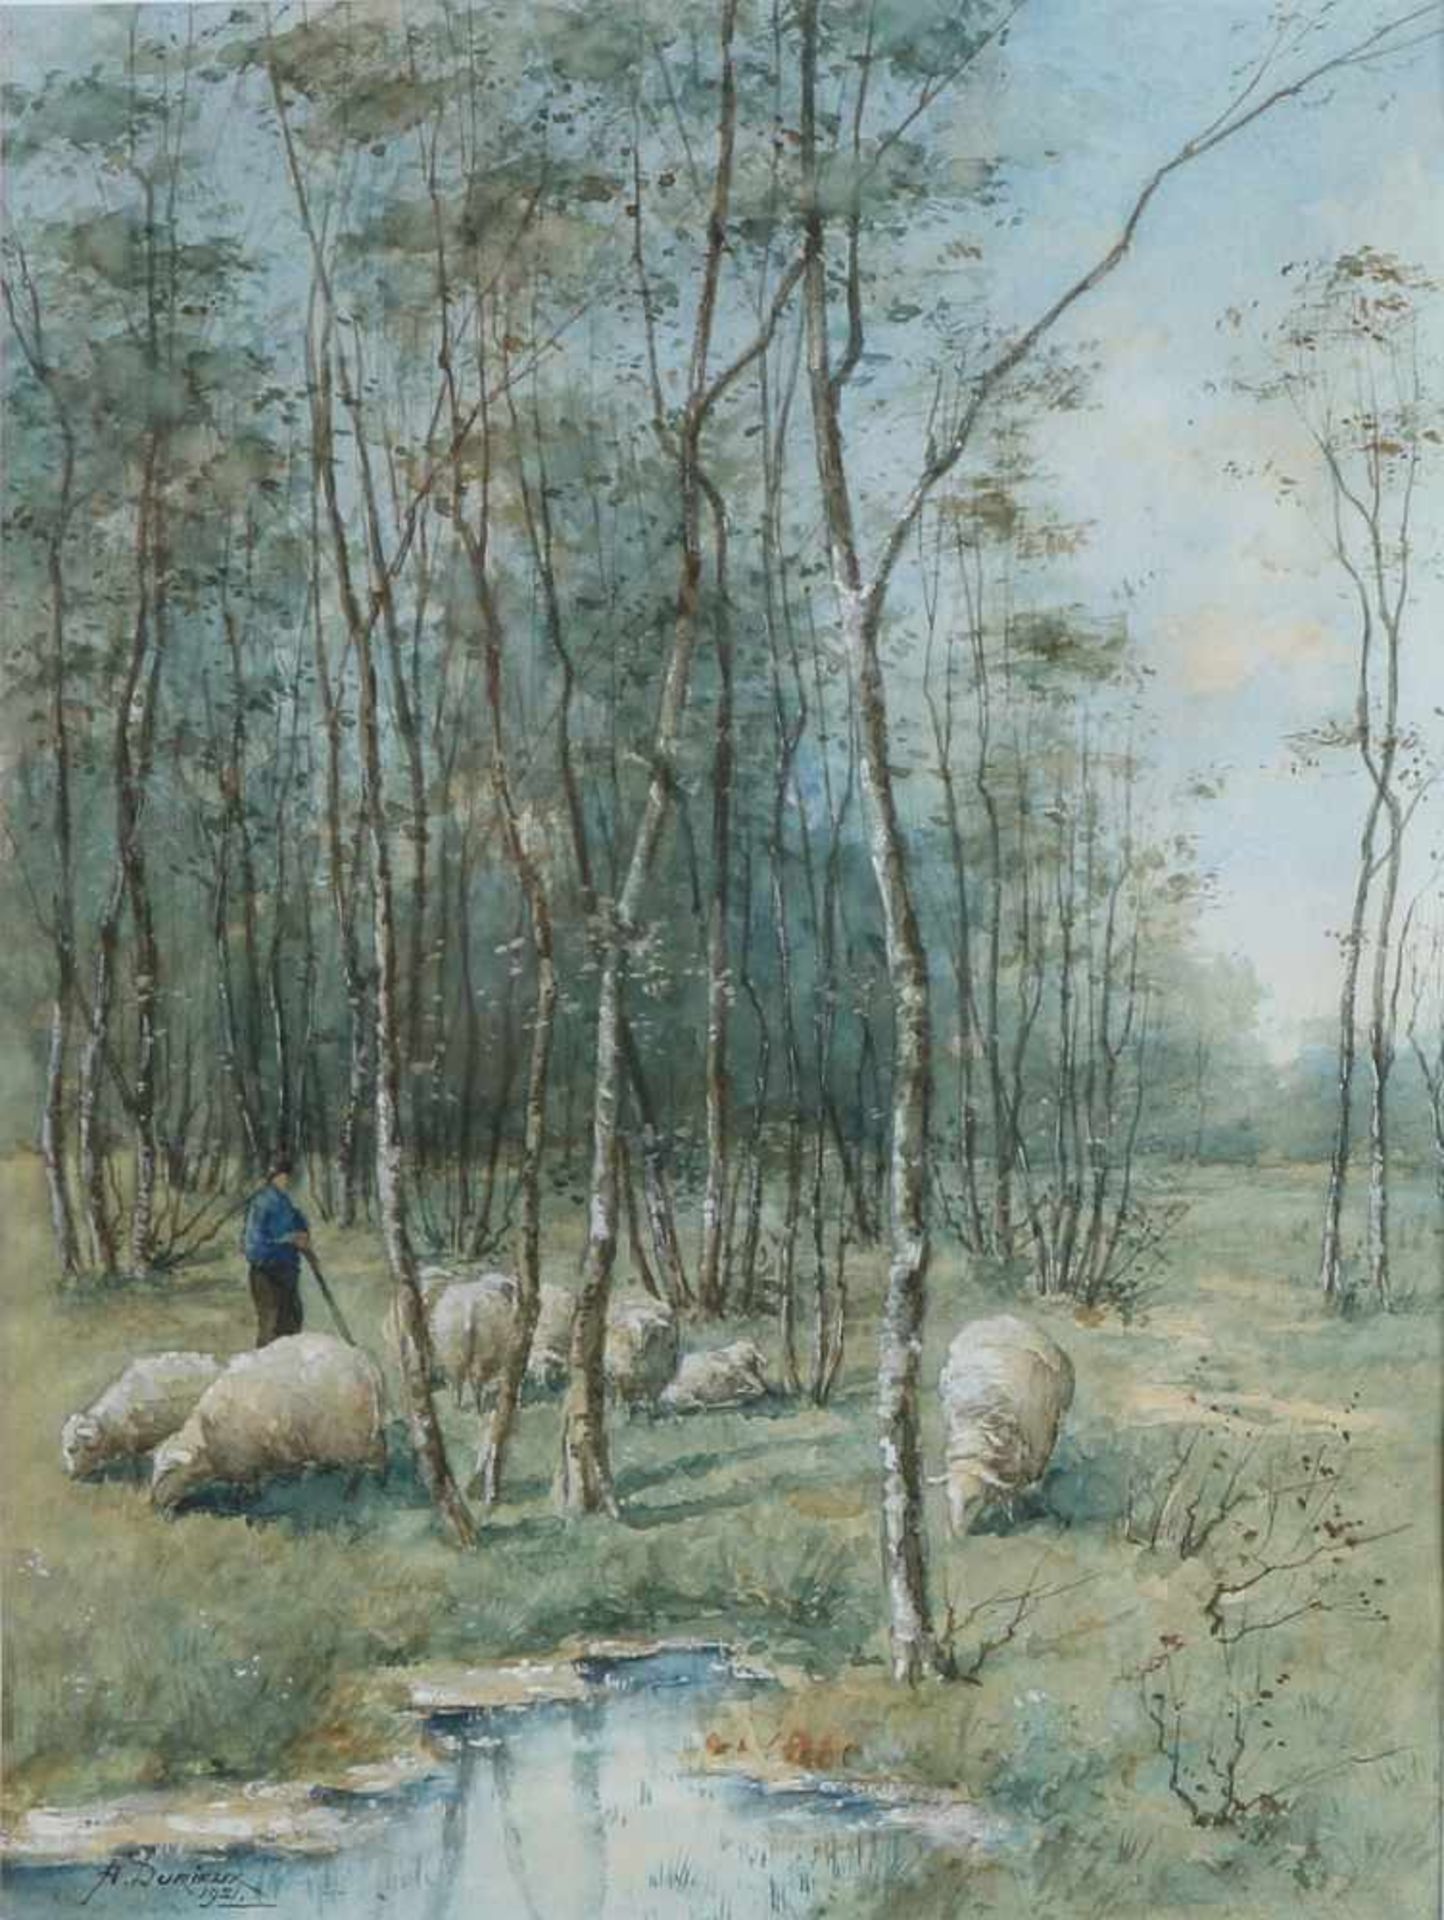 A. Durieux. (Alfred). 1921. 19. - 20. Jahrhundert. Hirte mit seinen Schafen am Waldrand. Aquarell